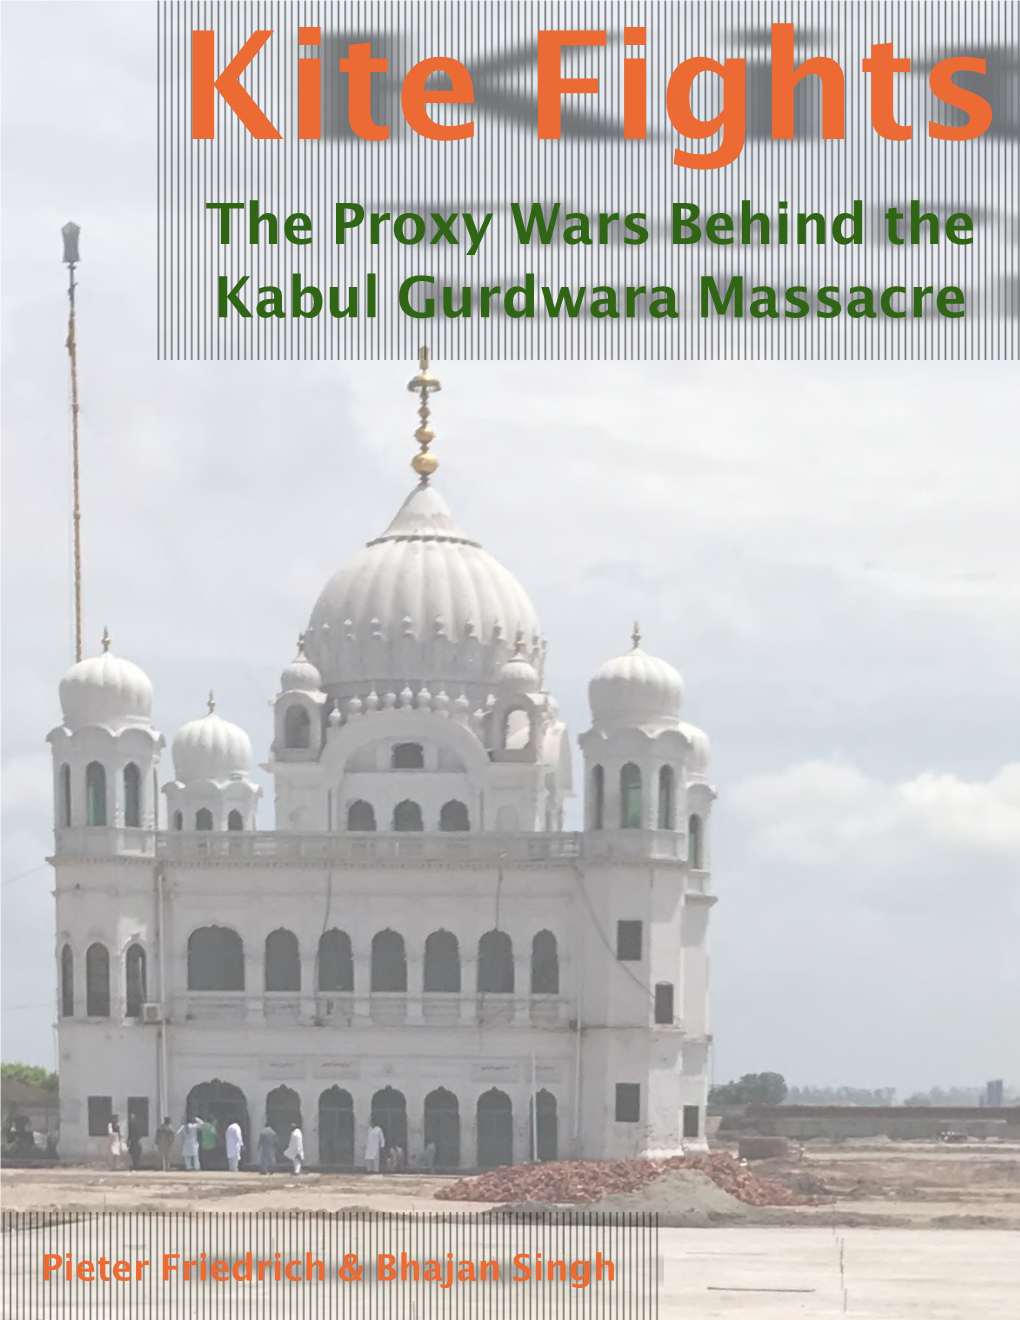 The Proxy Wars Behind the Kabul Gurdwara Massacre